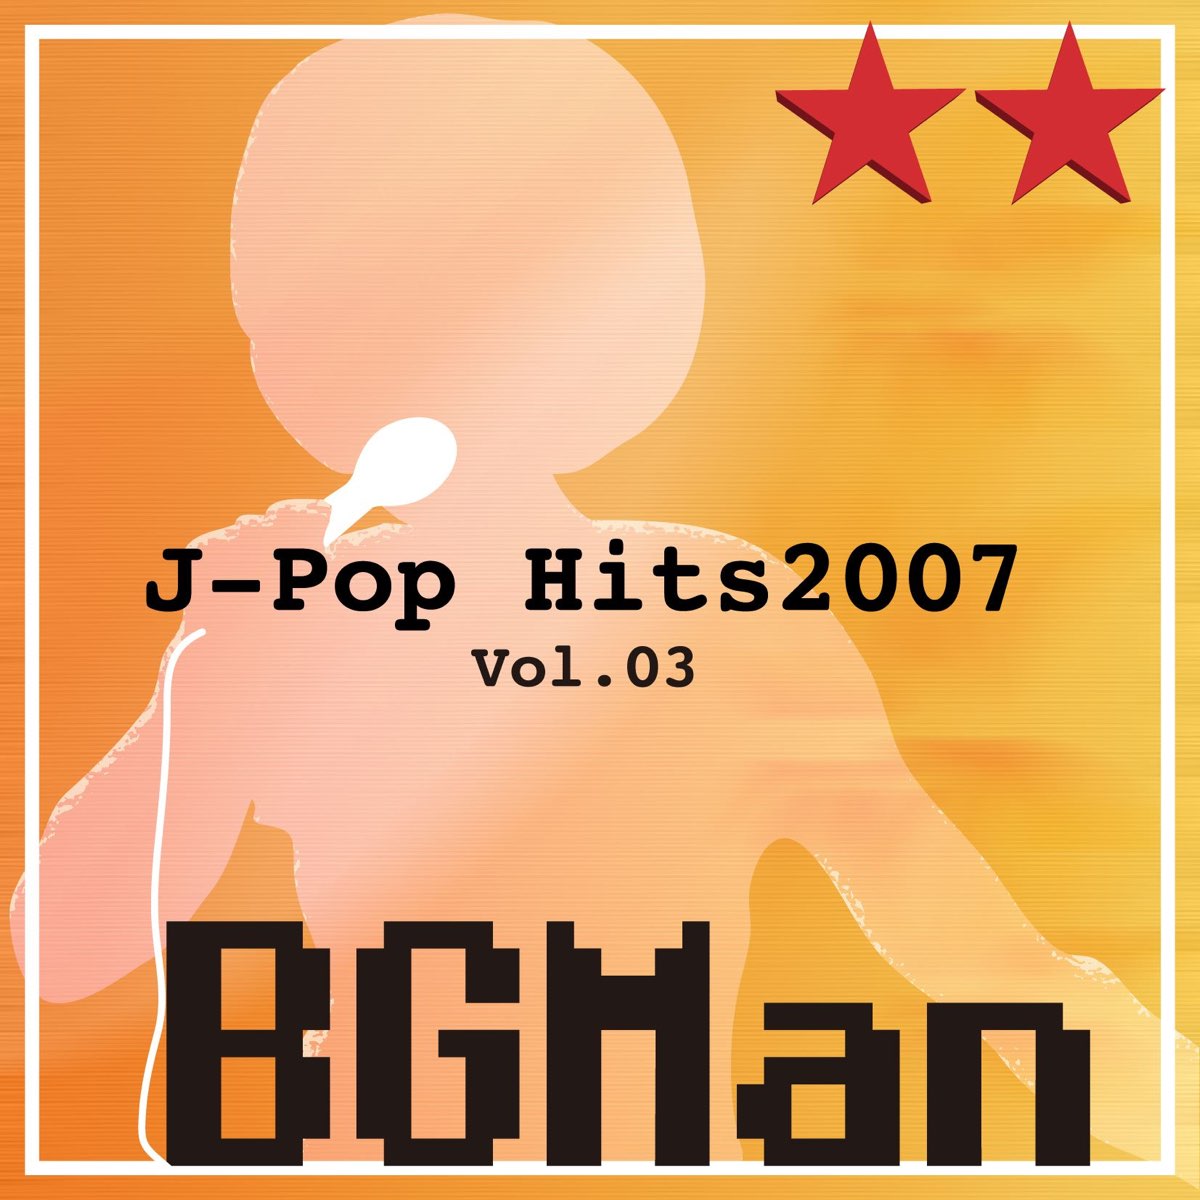 ryste forum Mexico J-Pop Hits 2007 Vol. 03 by BGMan on Apple Music